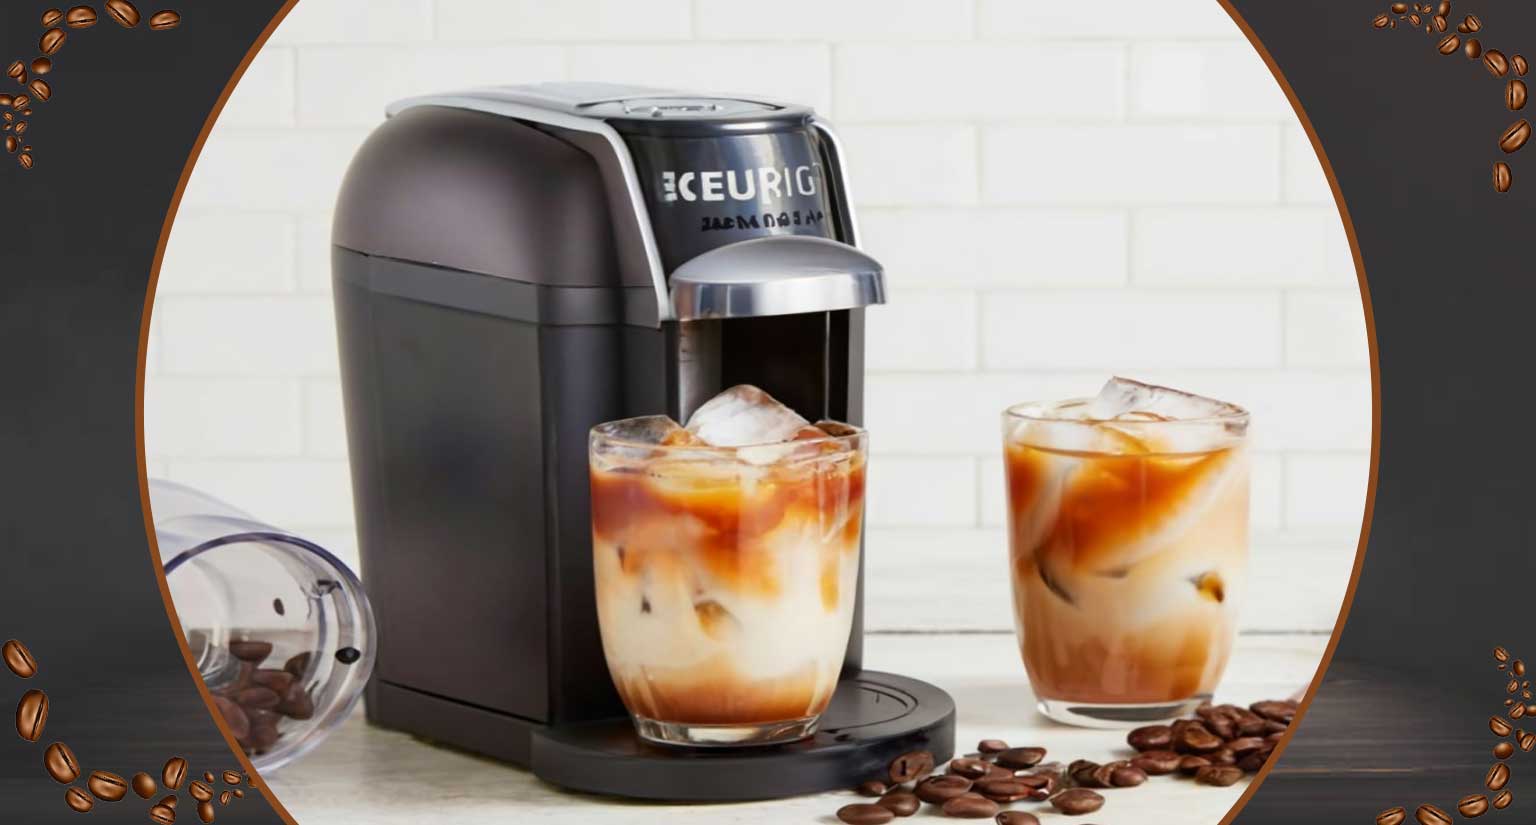 How to Make Iced Coffee Keurig?